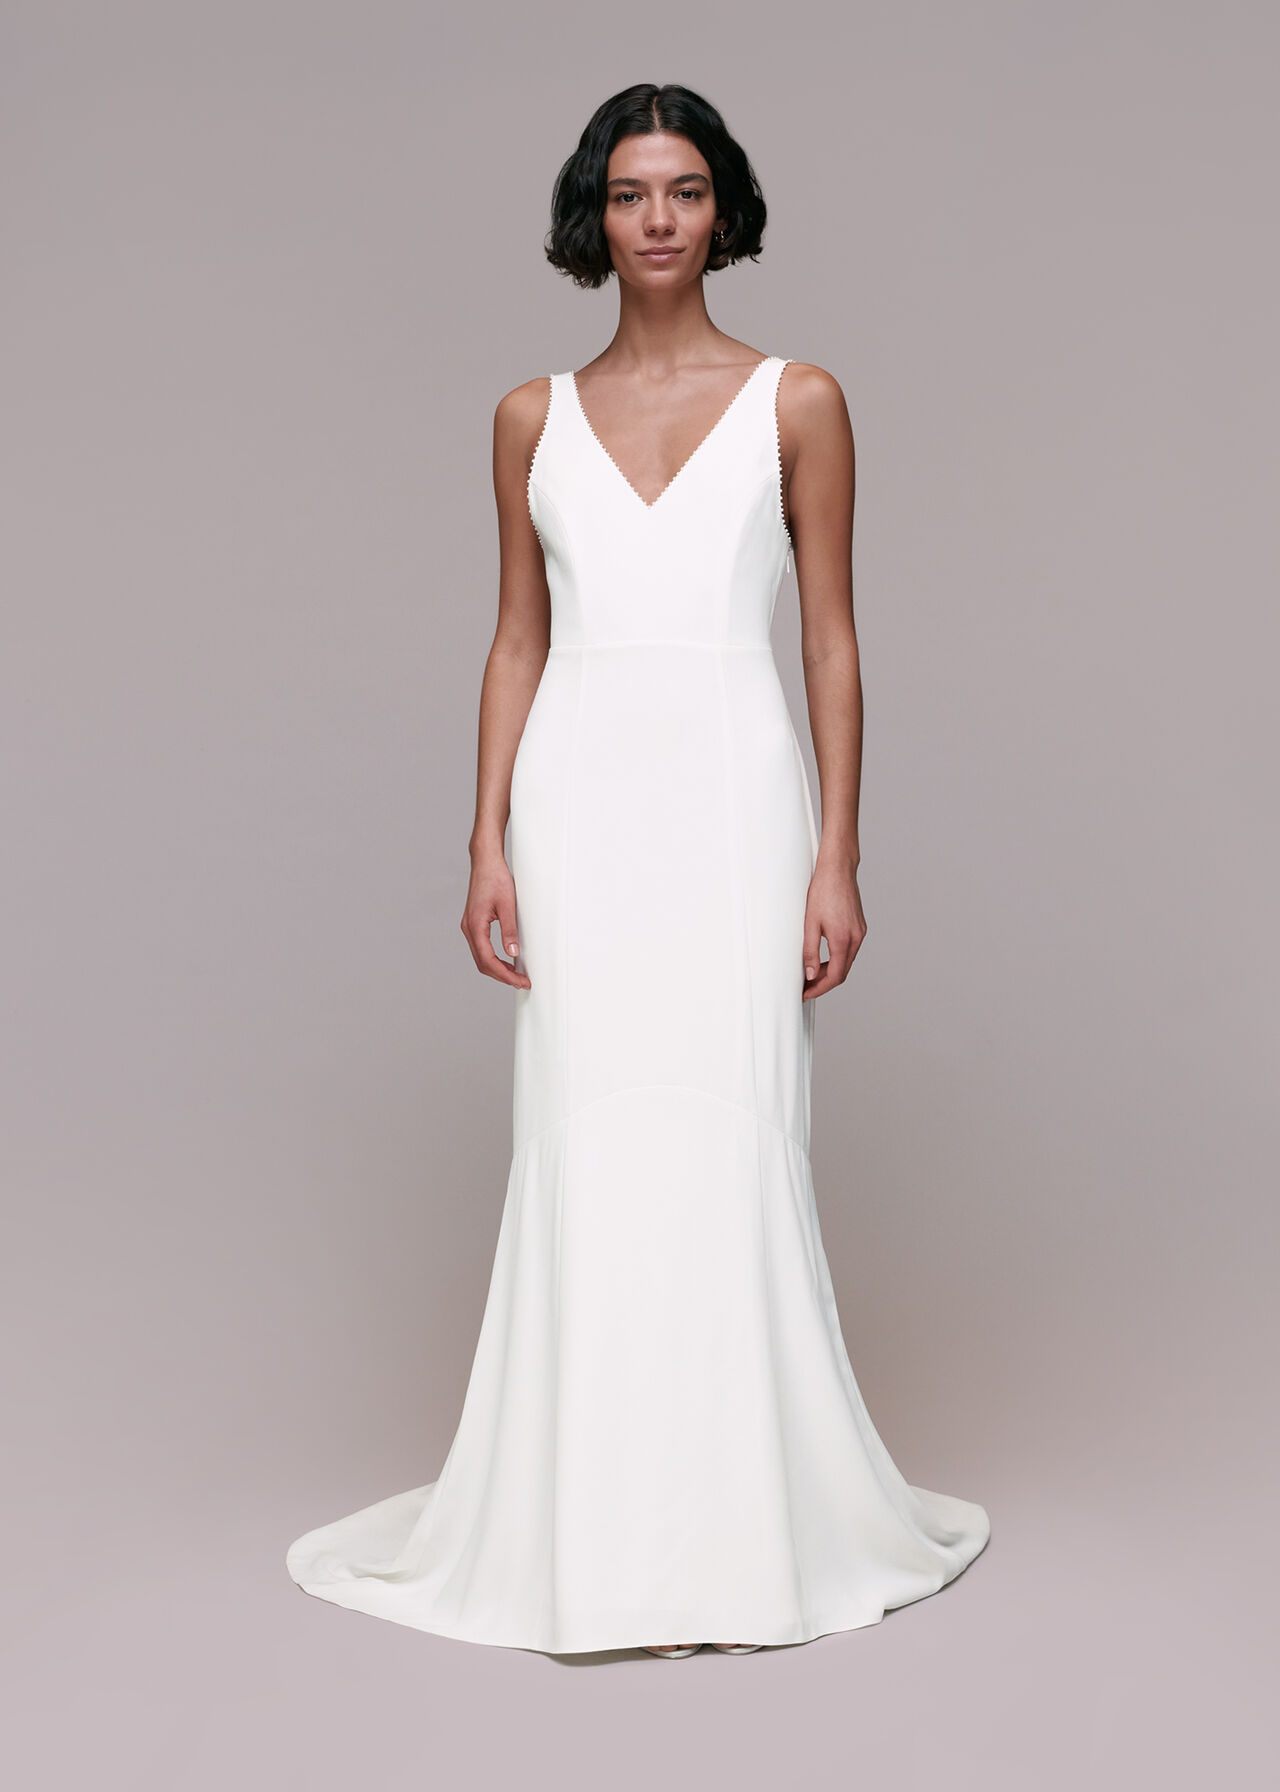 Elegant V-Neck Wedding Dress in Ivory | Whistles Bridal Exclusive ...